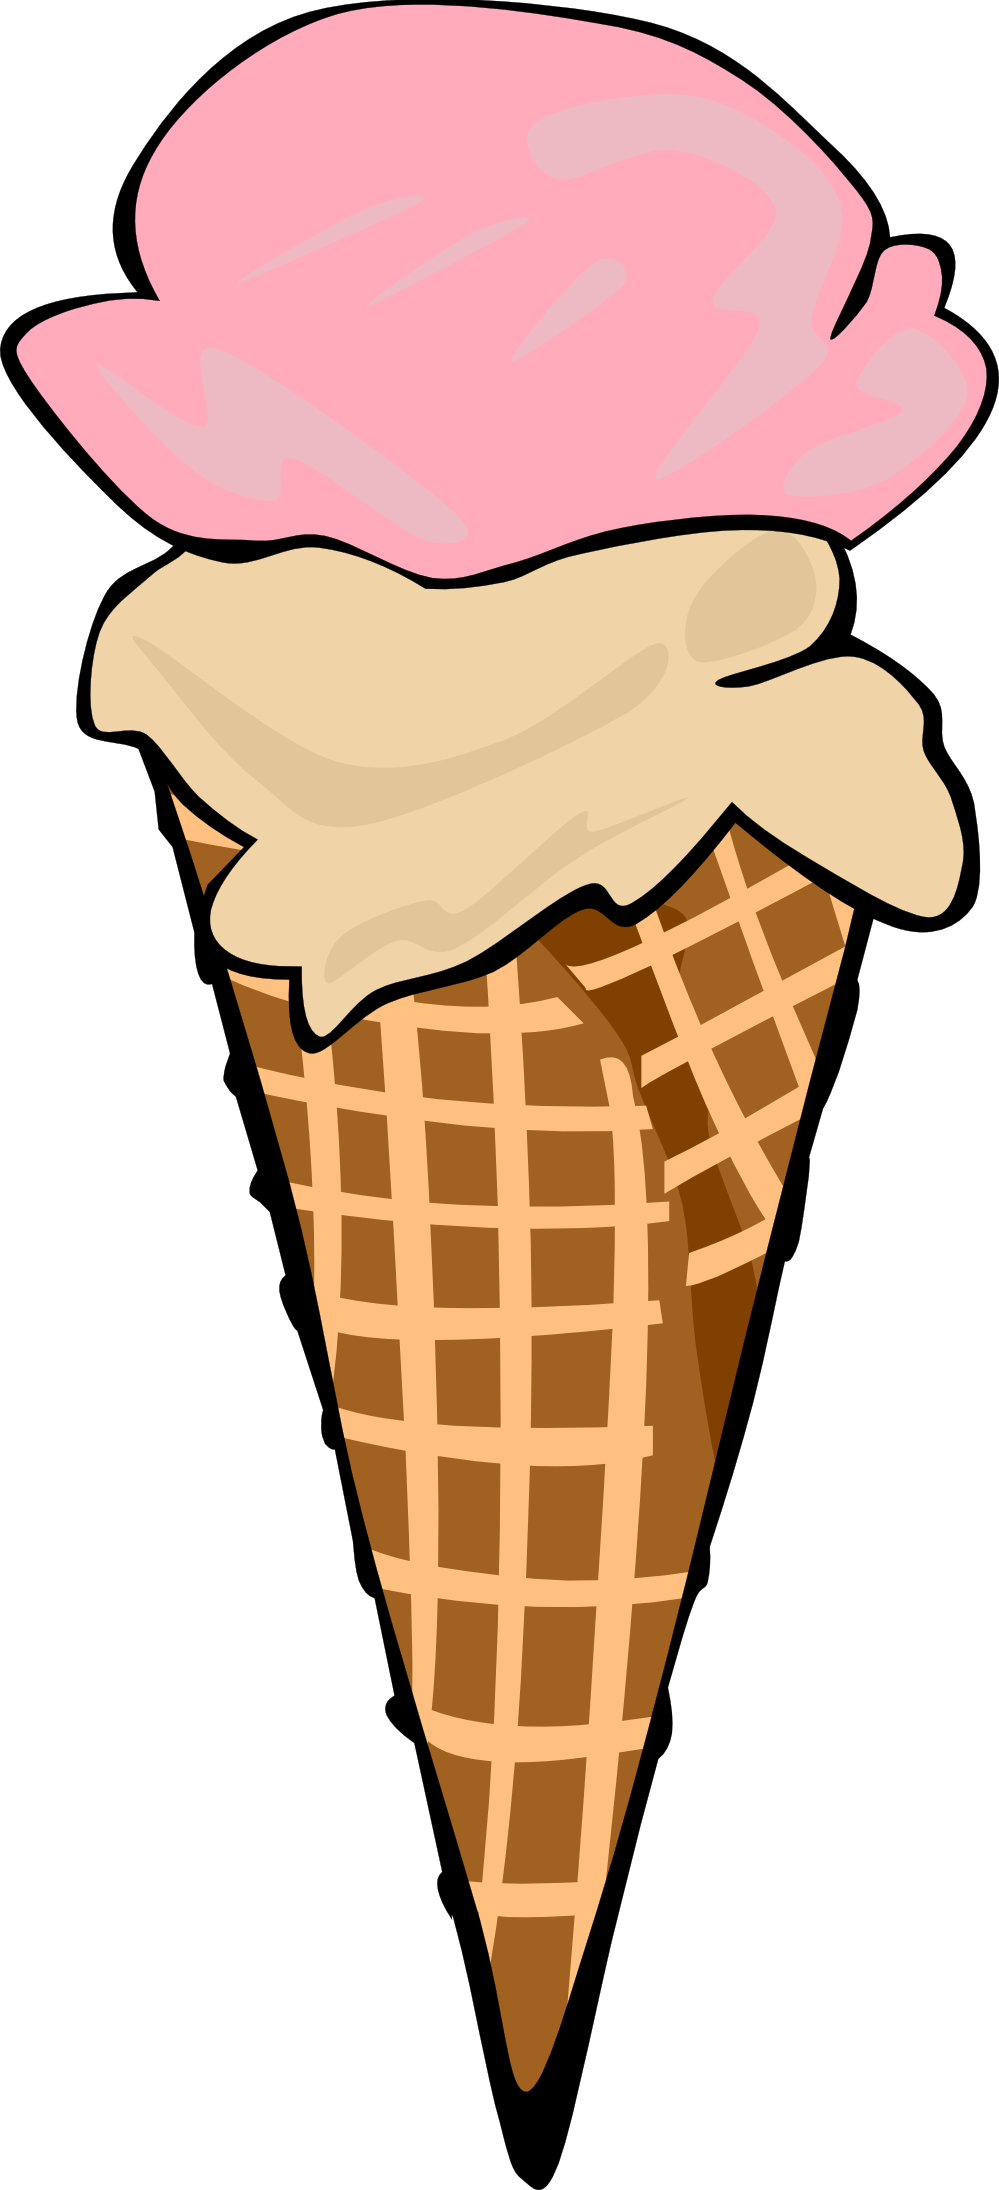 Ice cream cone empty ice creamne clipart free clipart images 